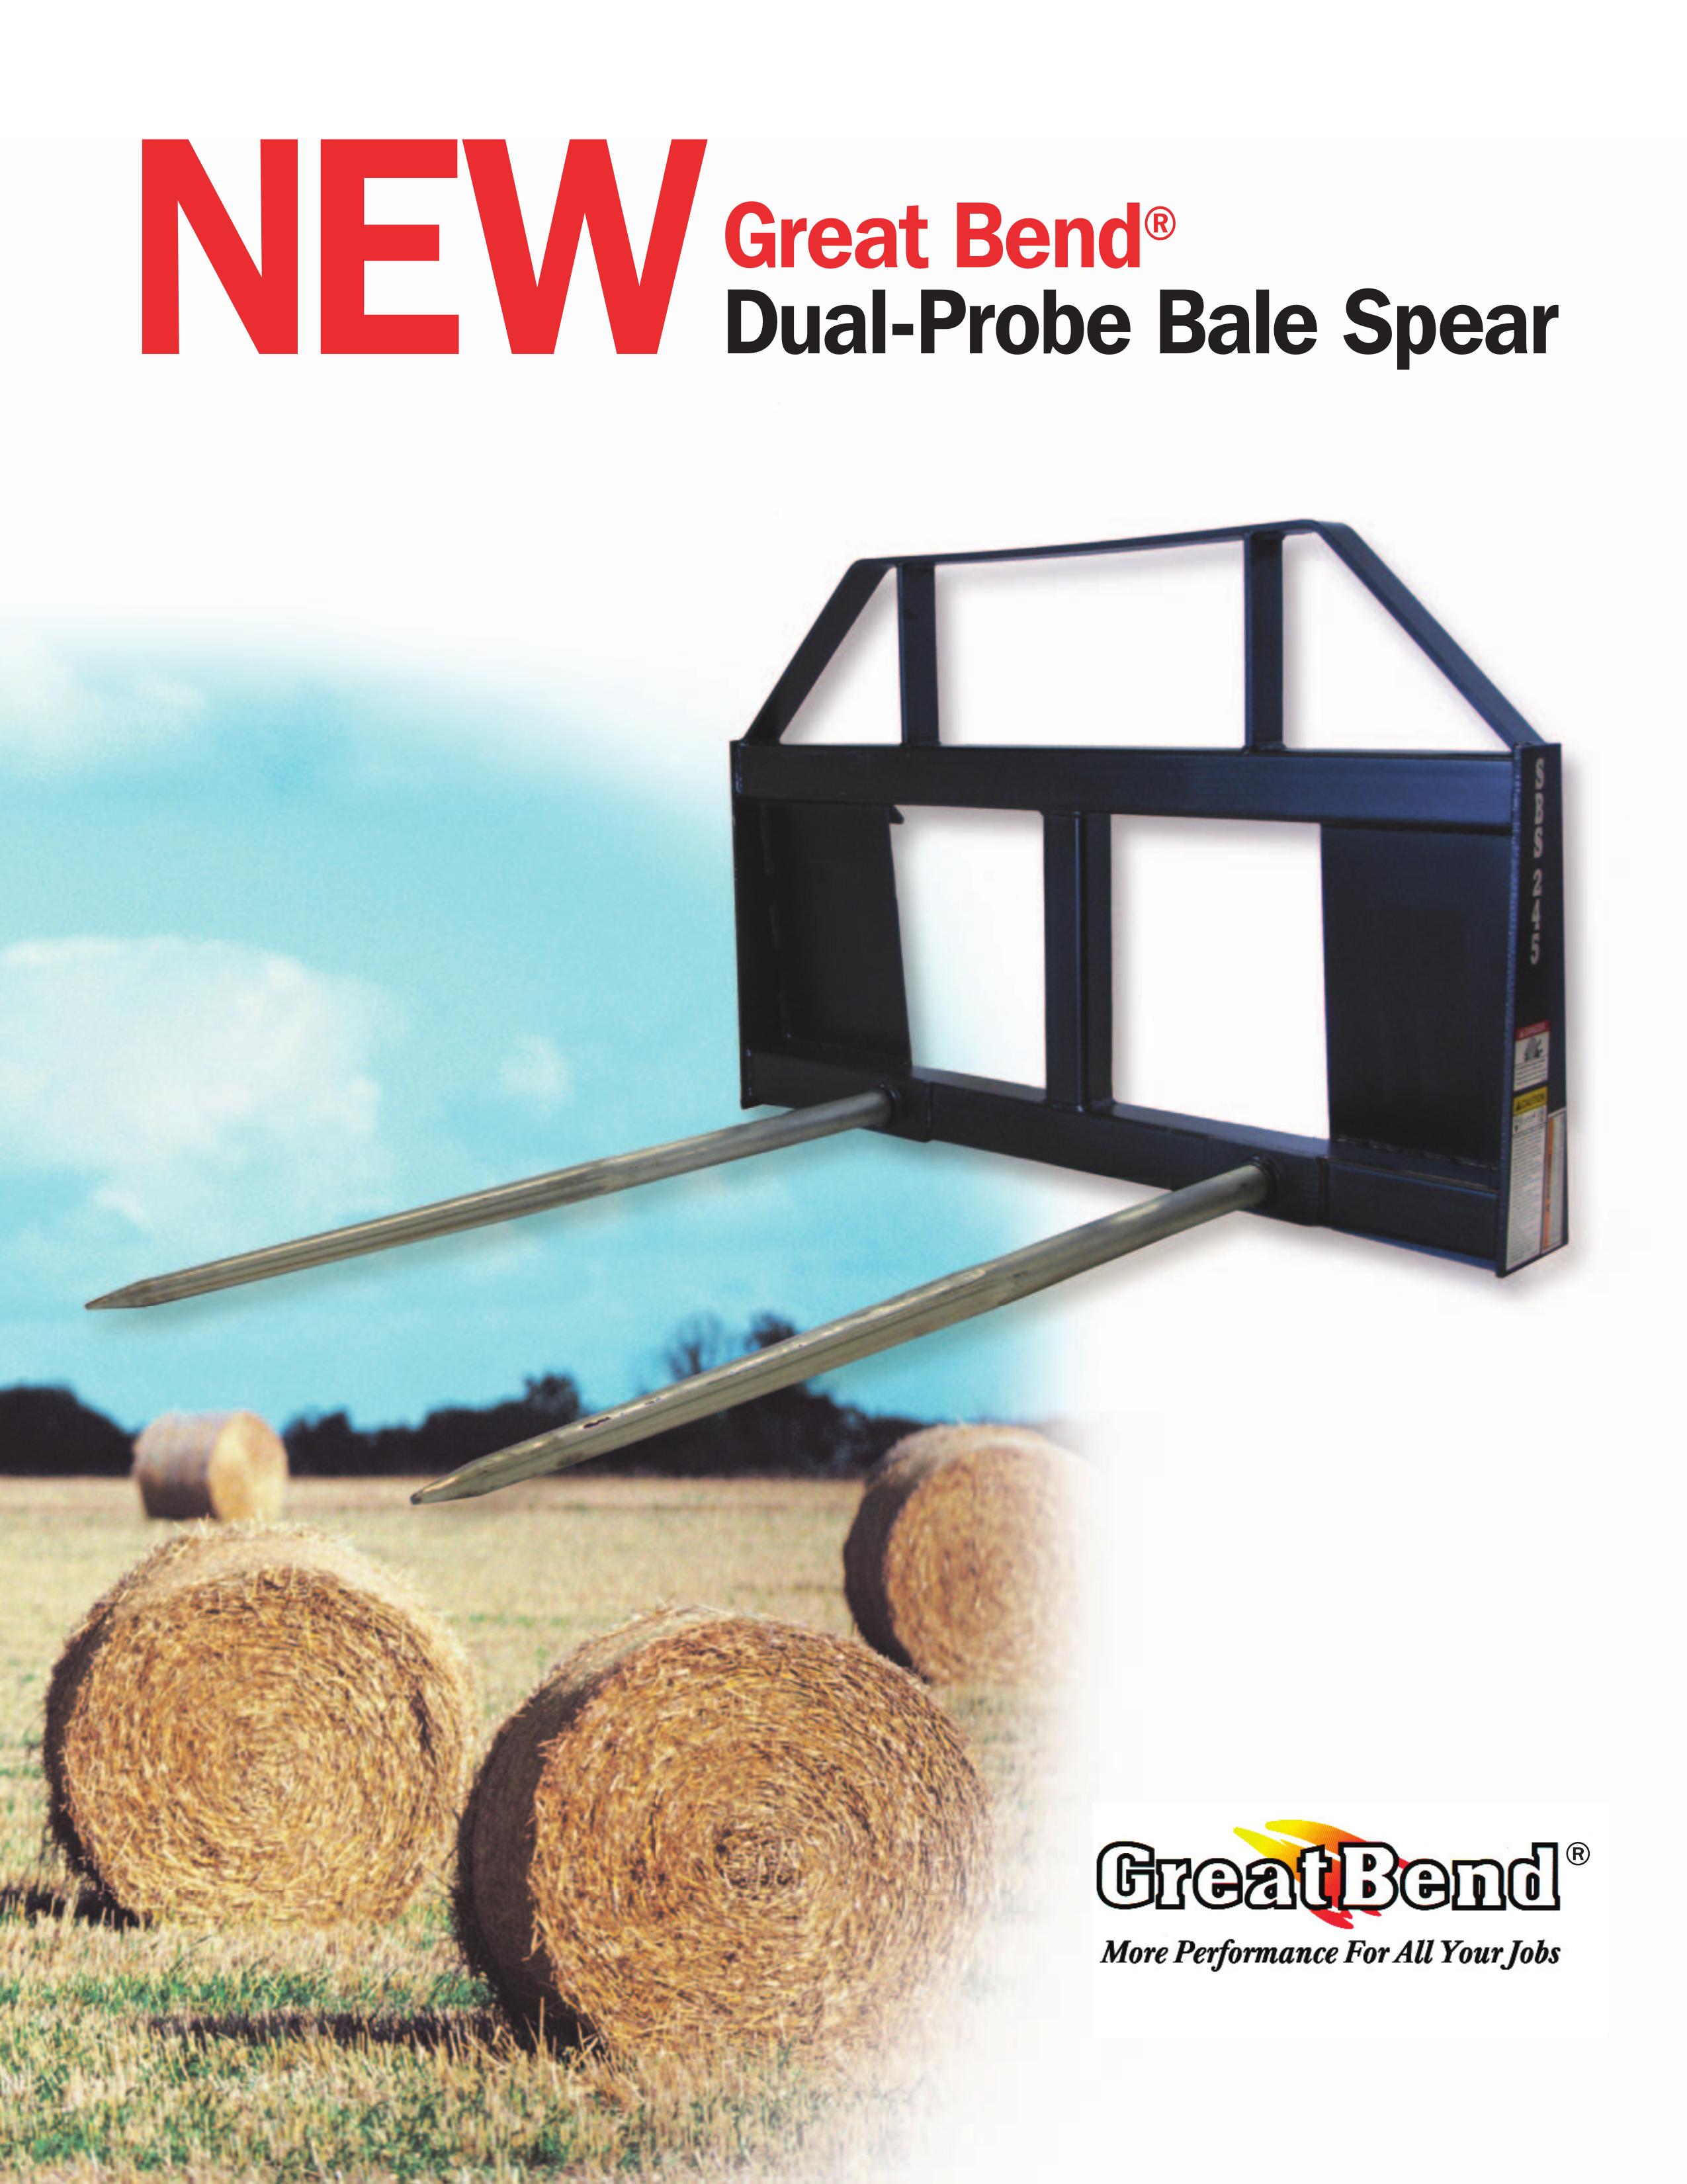 Bush Hog Dual-Probe Bale Spear Compact Loader User Manual